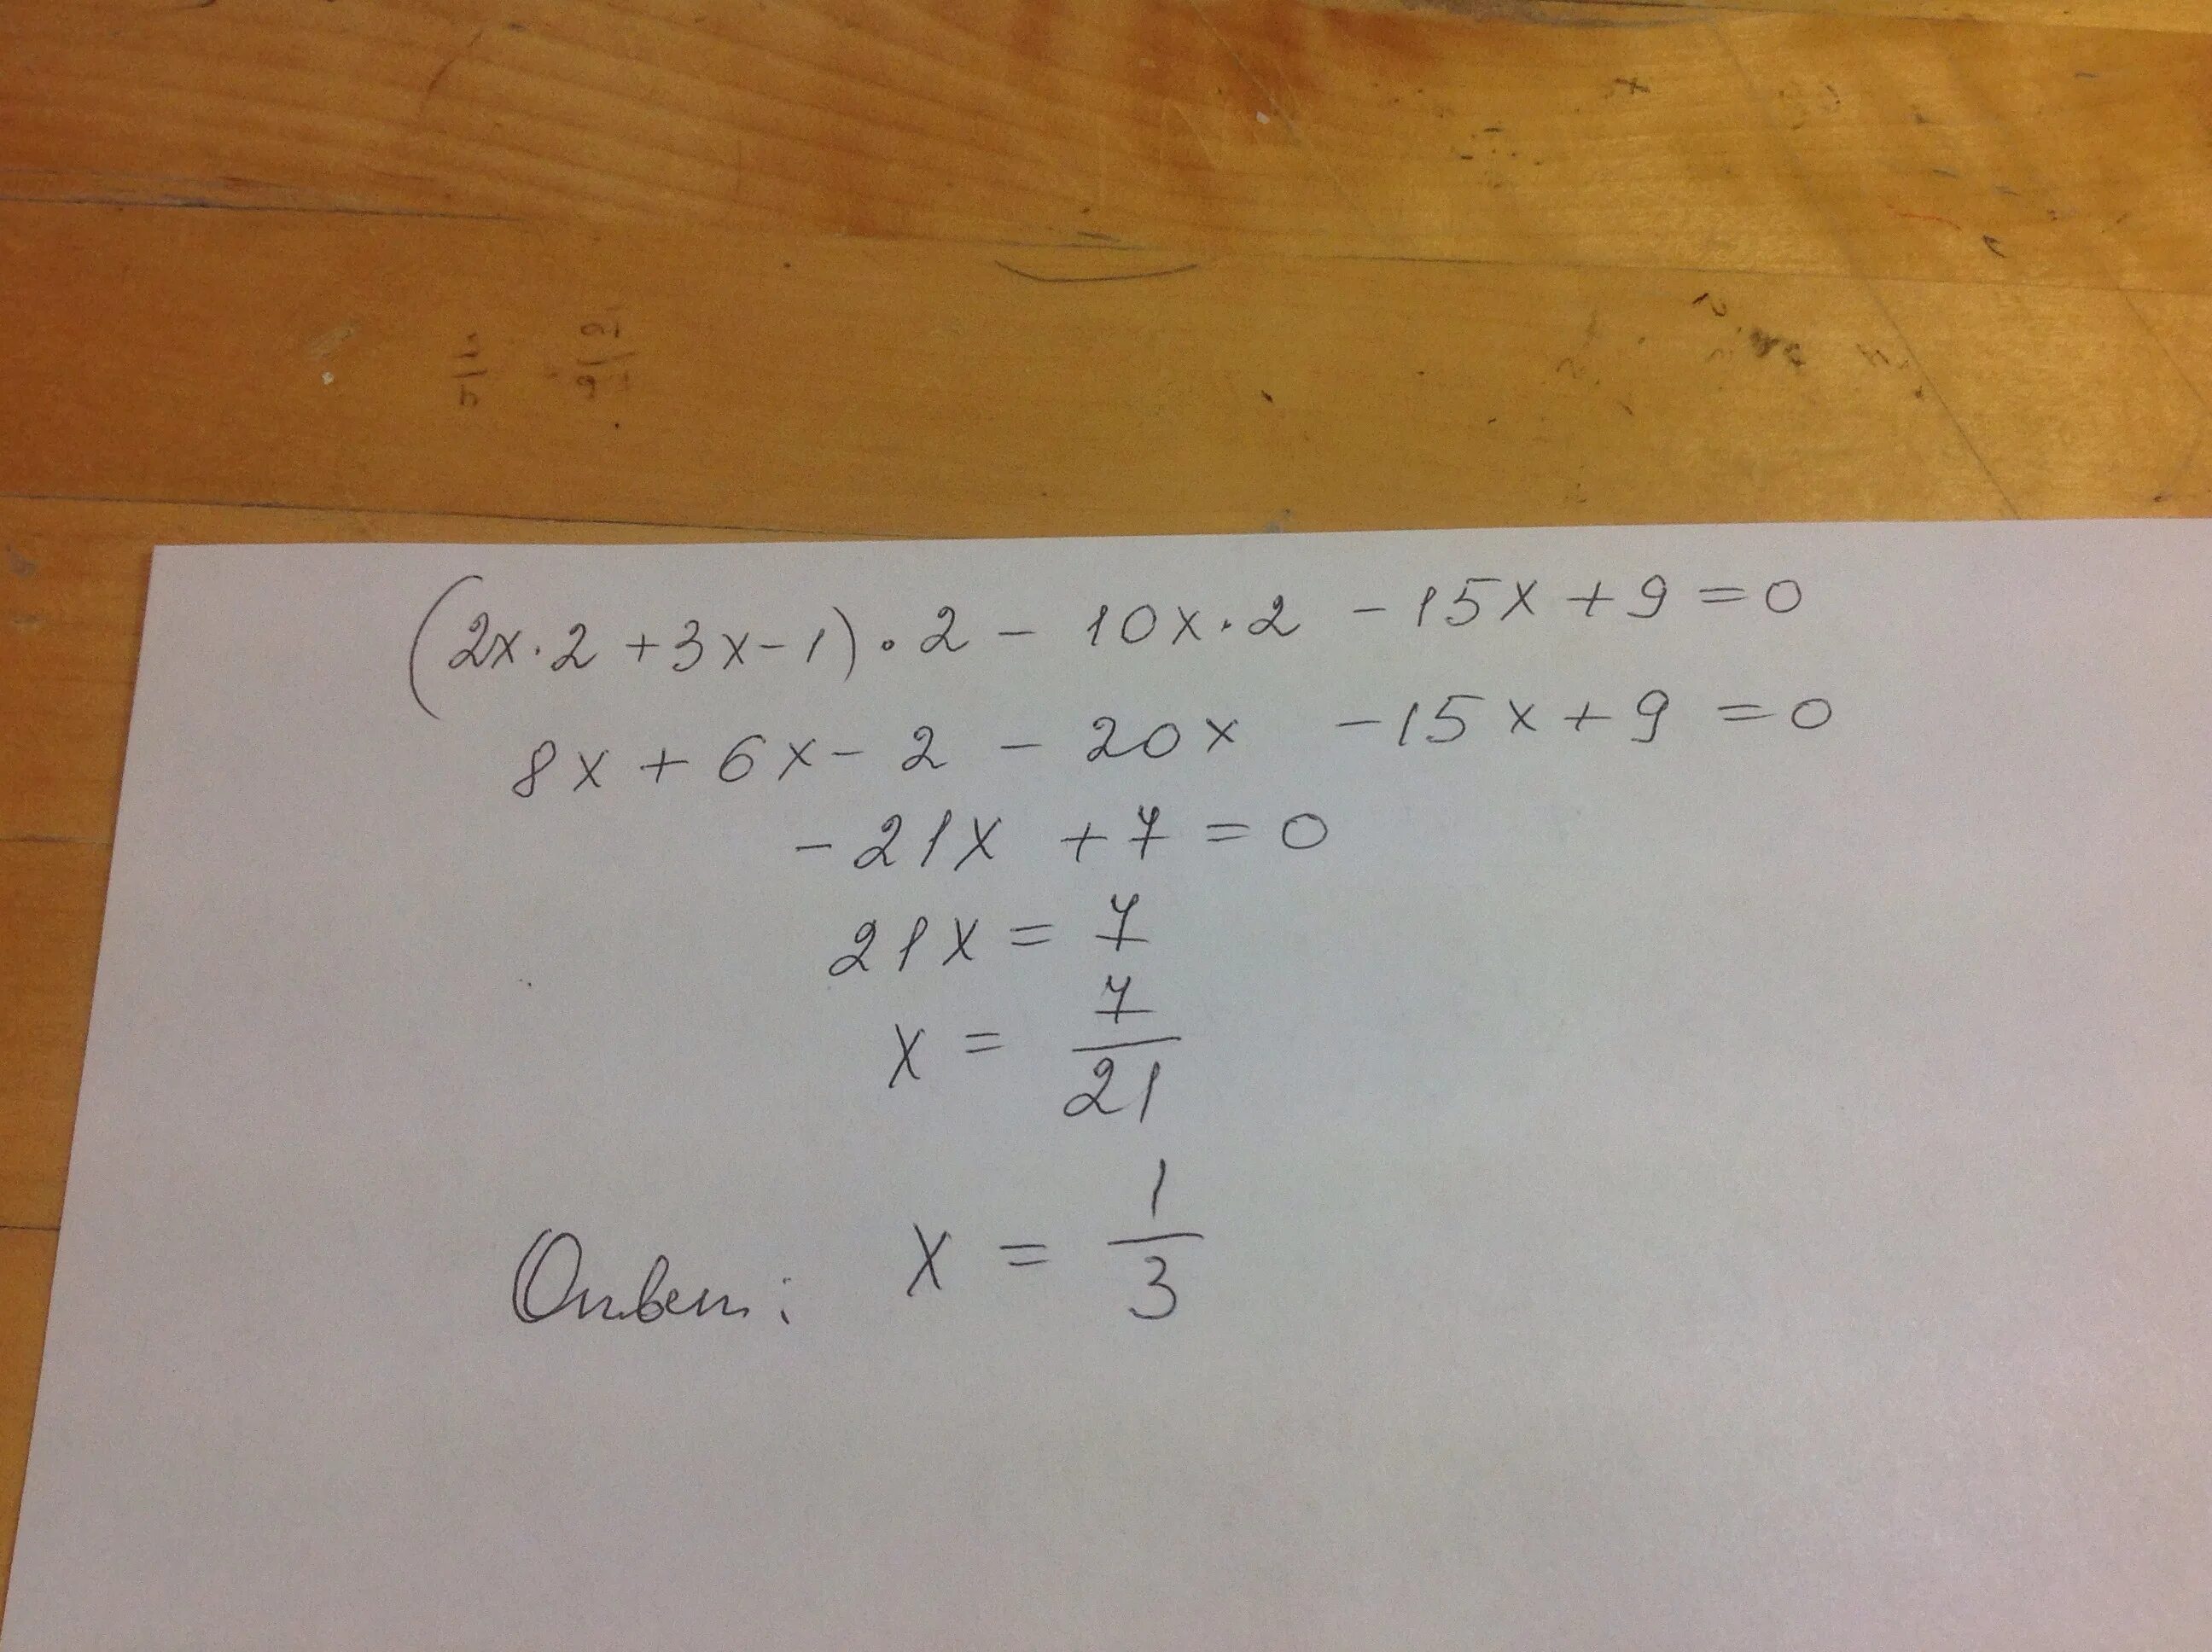 X3-2x2-2x+1. 10x 15 уравнение решении. 1/2x2-10. (X - 15) + (3x - 7) = 2(x−15)+(3x−7)=2. 10x 7x 3 0